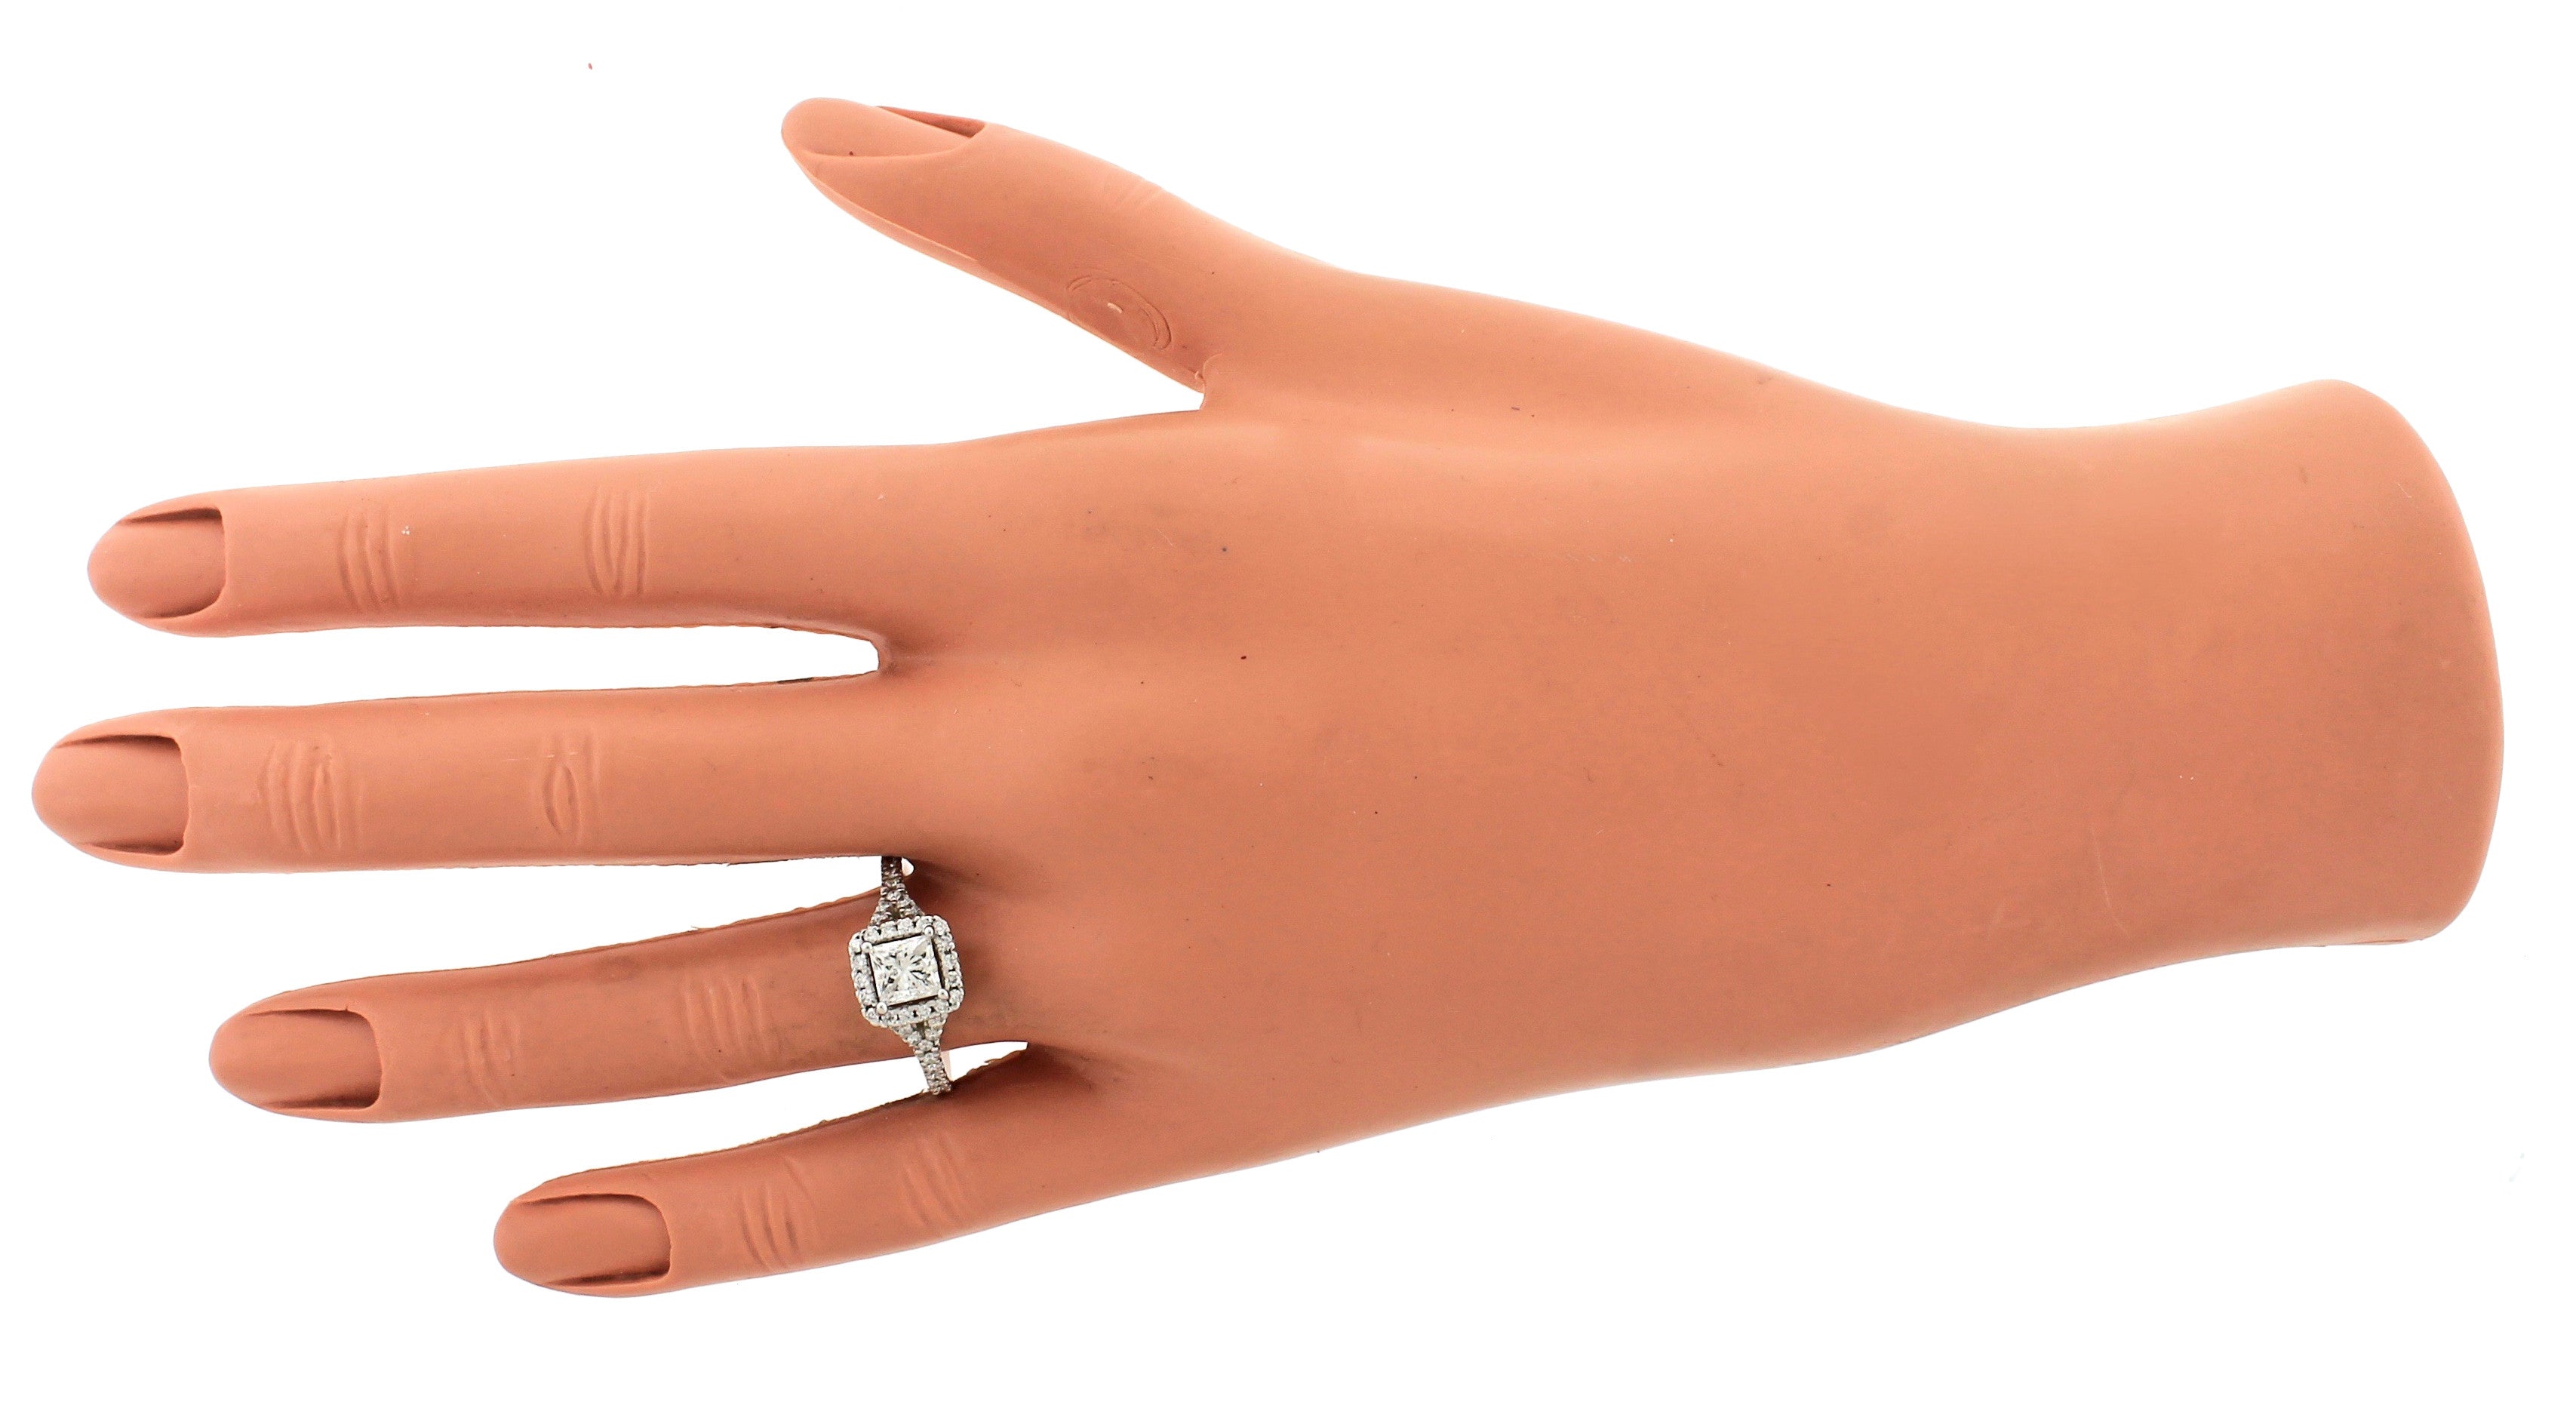 $4730 Ladies Estate 1.58ctw Princess Diamond Halo 14K White Gold Engagement Ring